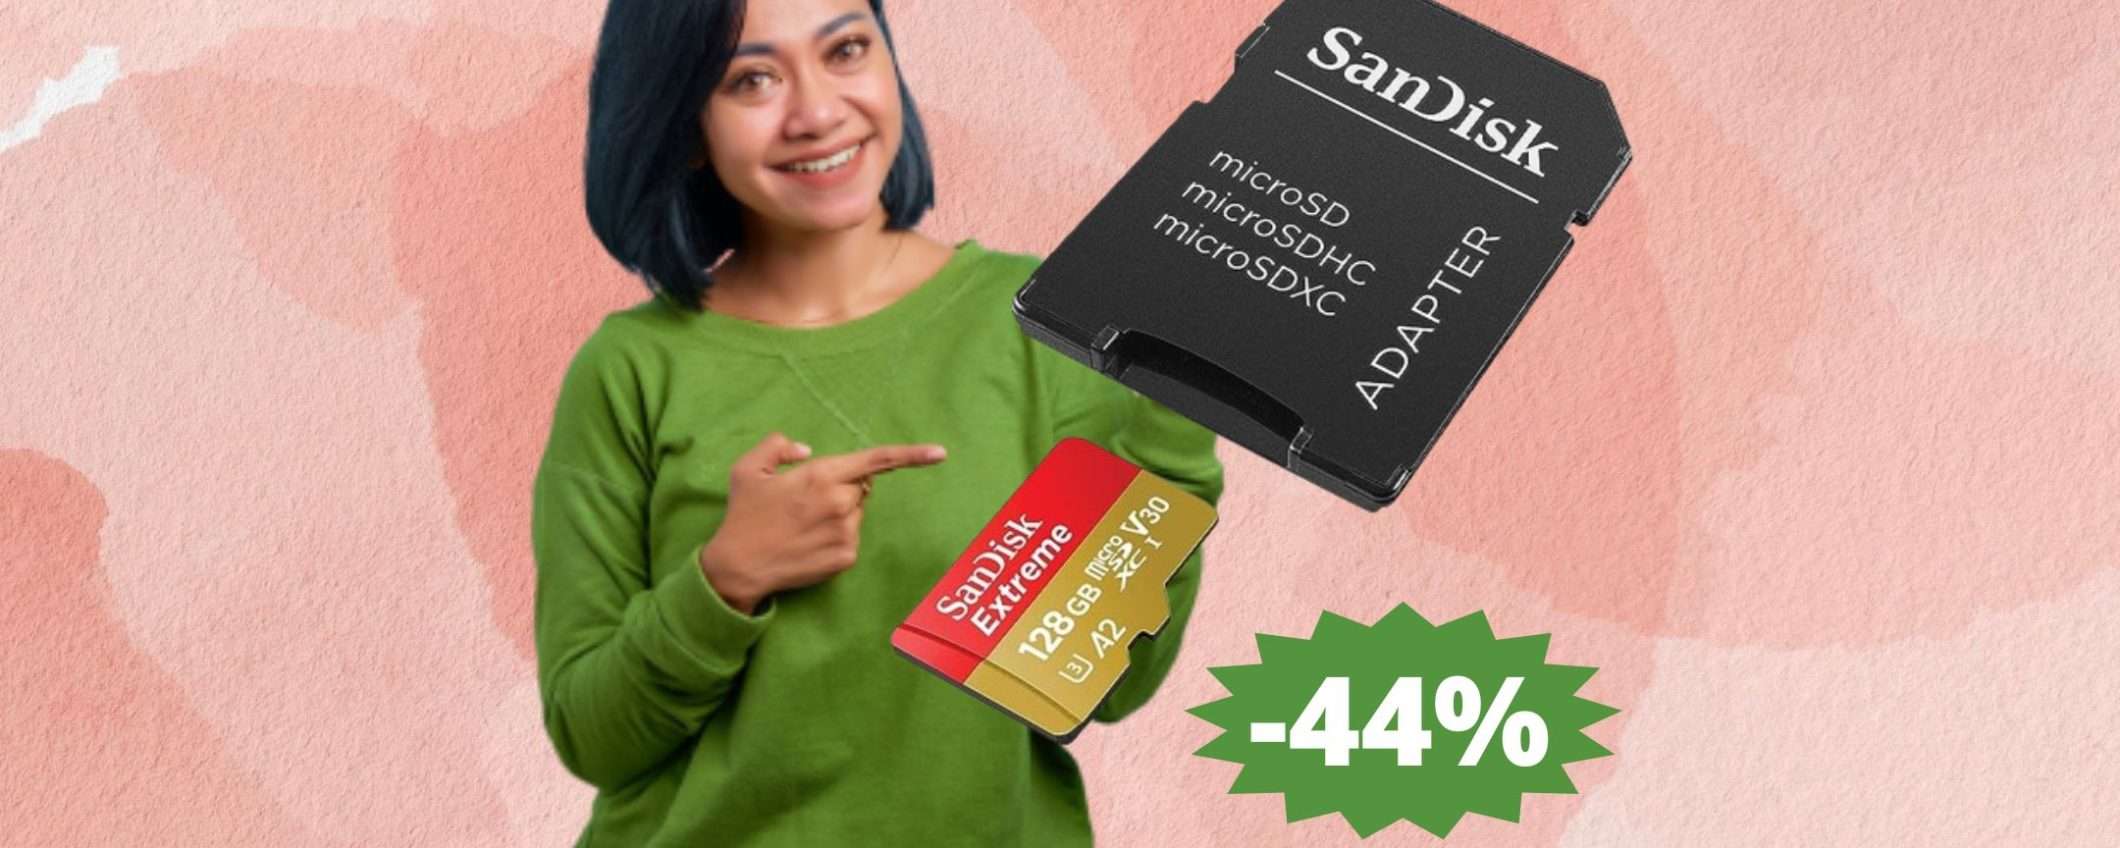 MicroSD SanDisk 128GB Extreme: MEGA sconto del 44%